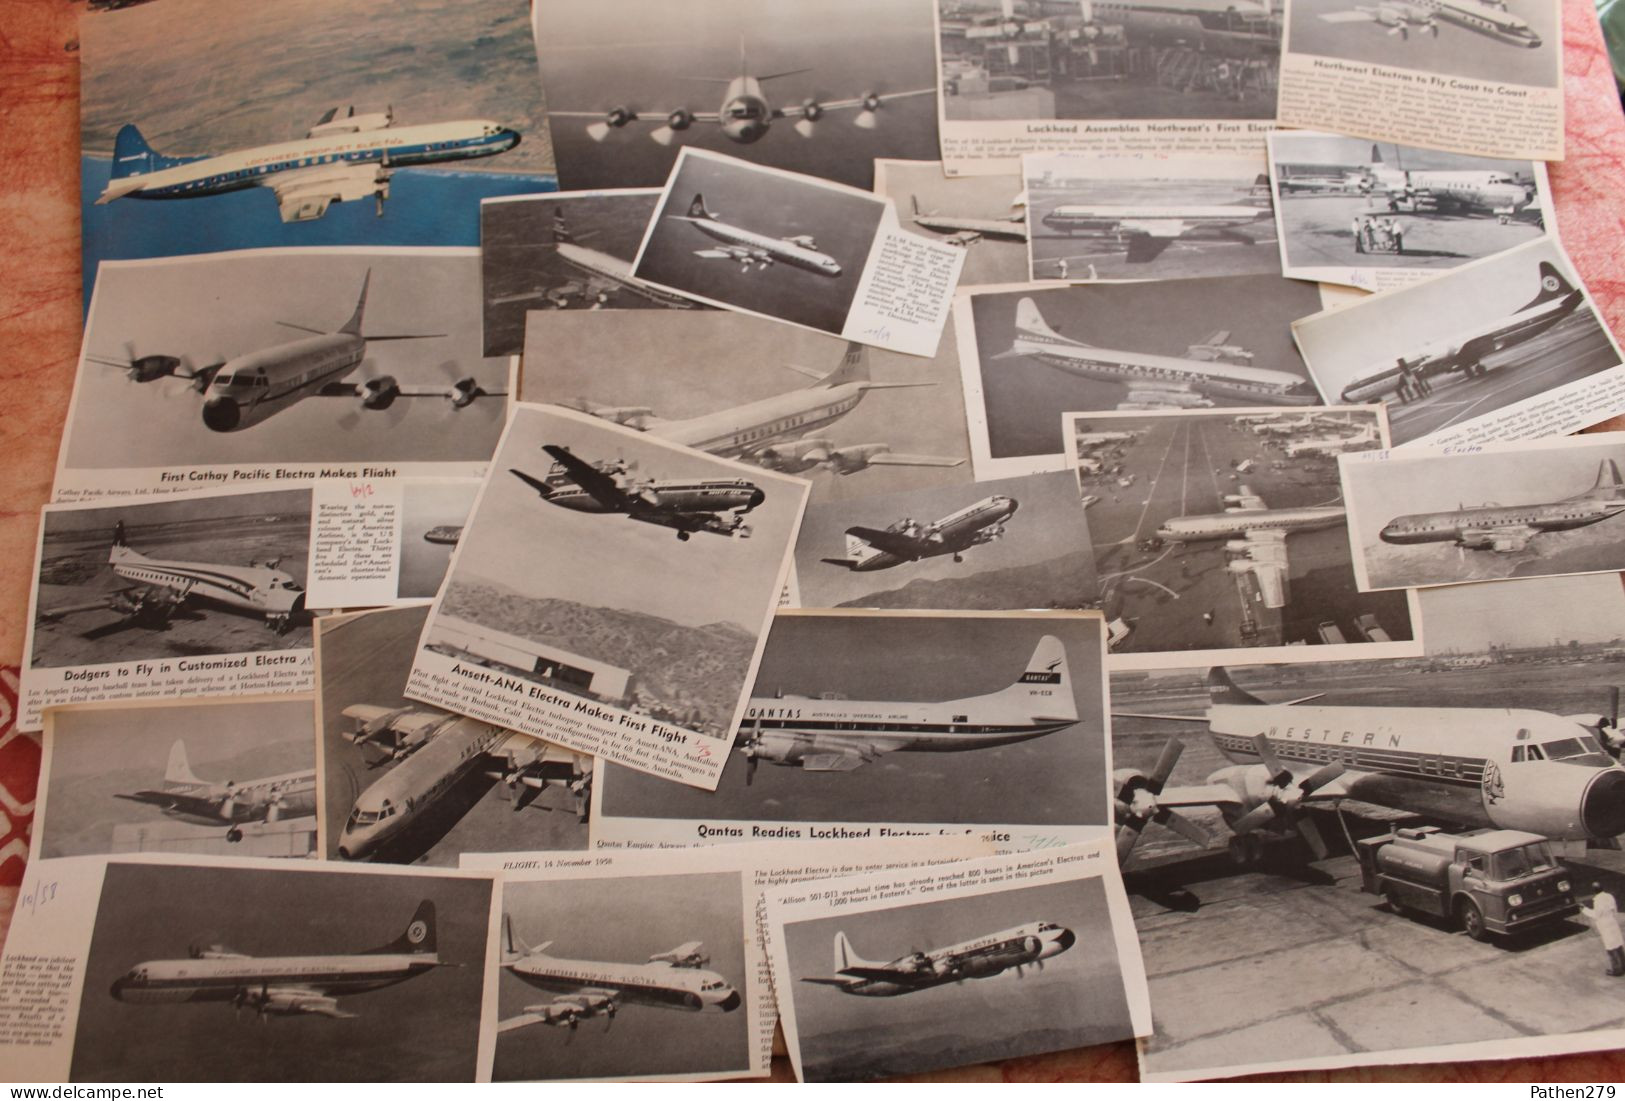 Lot De 246g D'anciennes Coupures De Presse Et Photo De L'aéronef Américain Lockheed "Electra" - Aviación